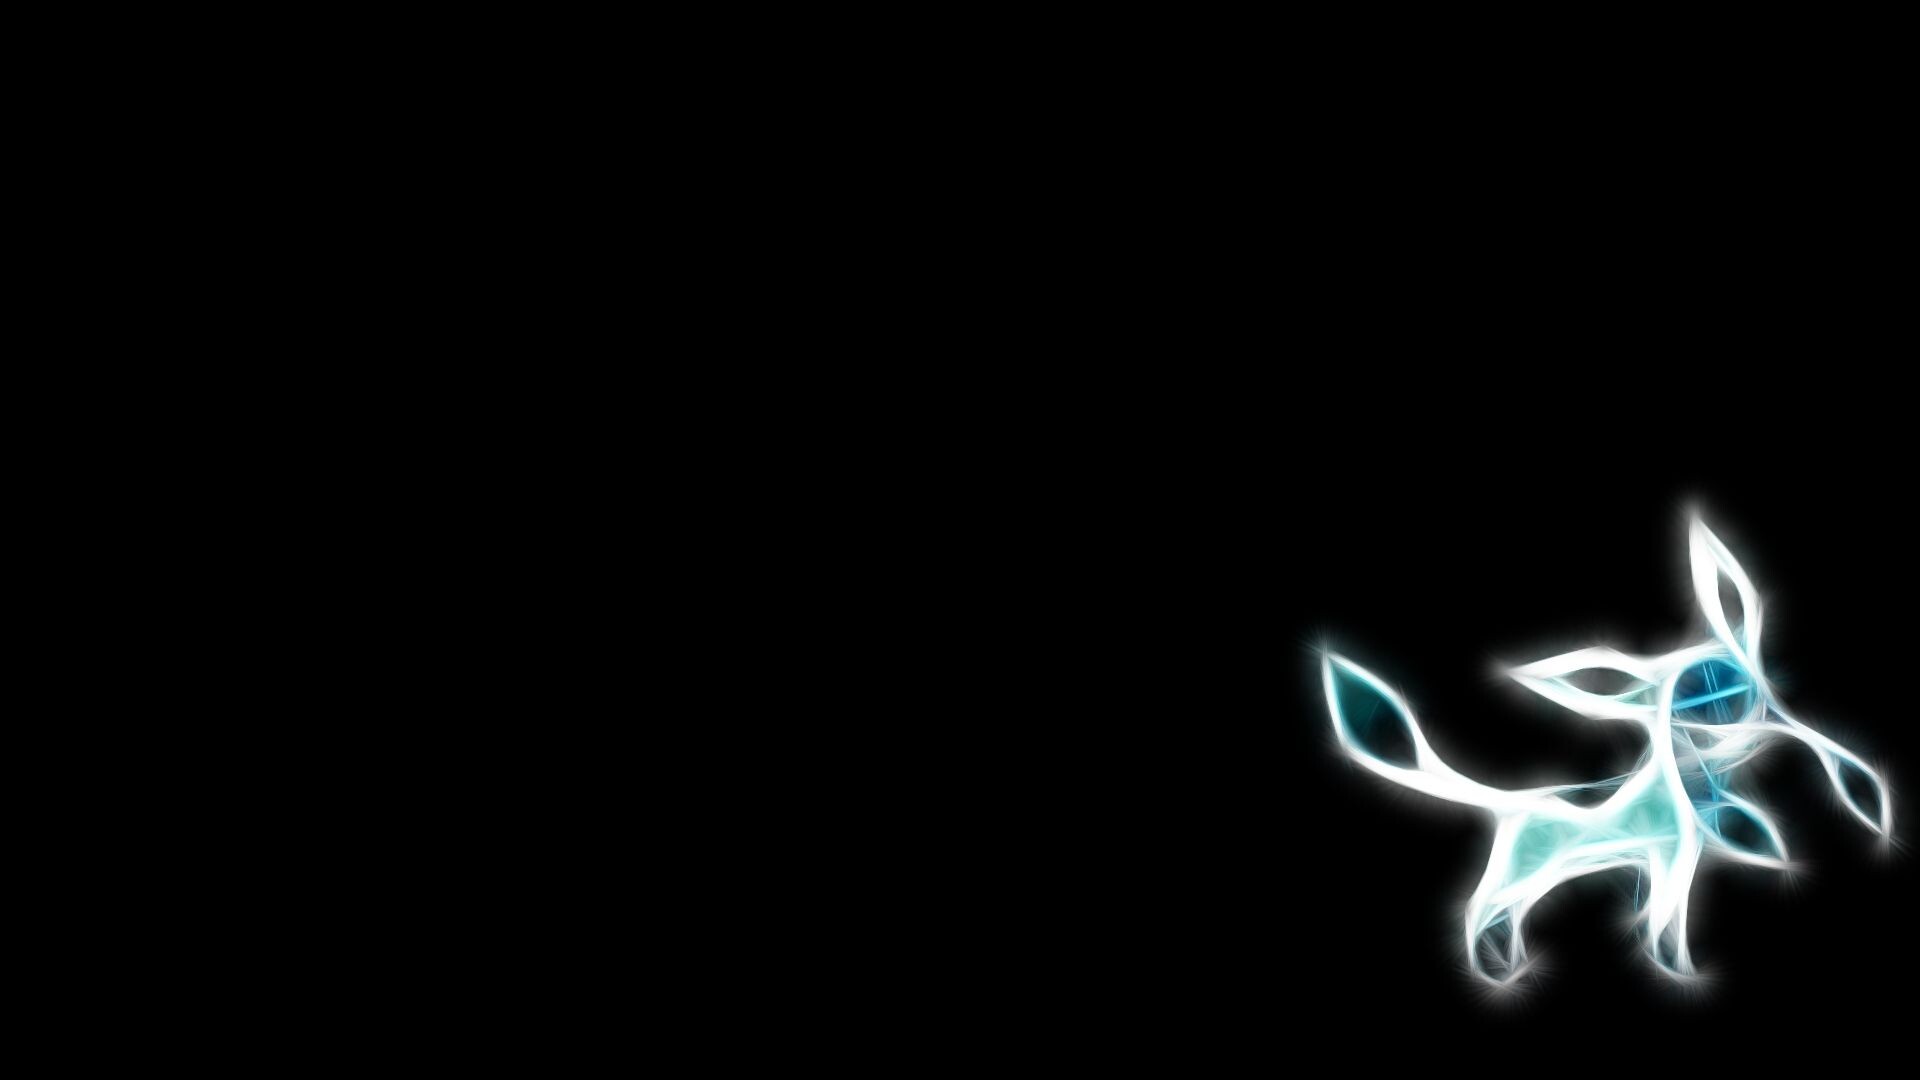 Glaceon: Glowing, shiny creature, A quadrupedal, mammalian Pokemon, Generation 4. 1920x1080 Full HD Wallpaper.